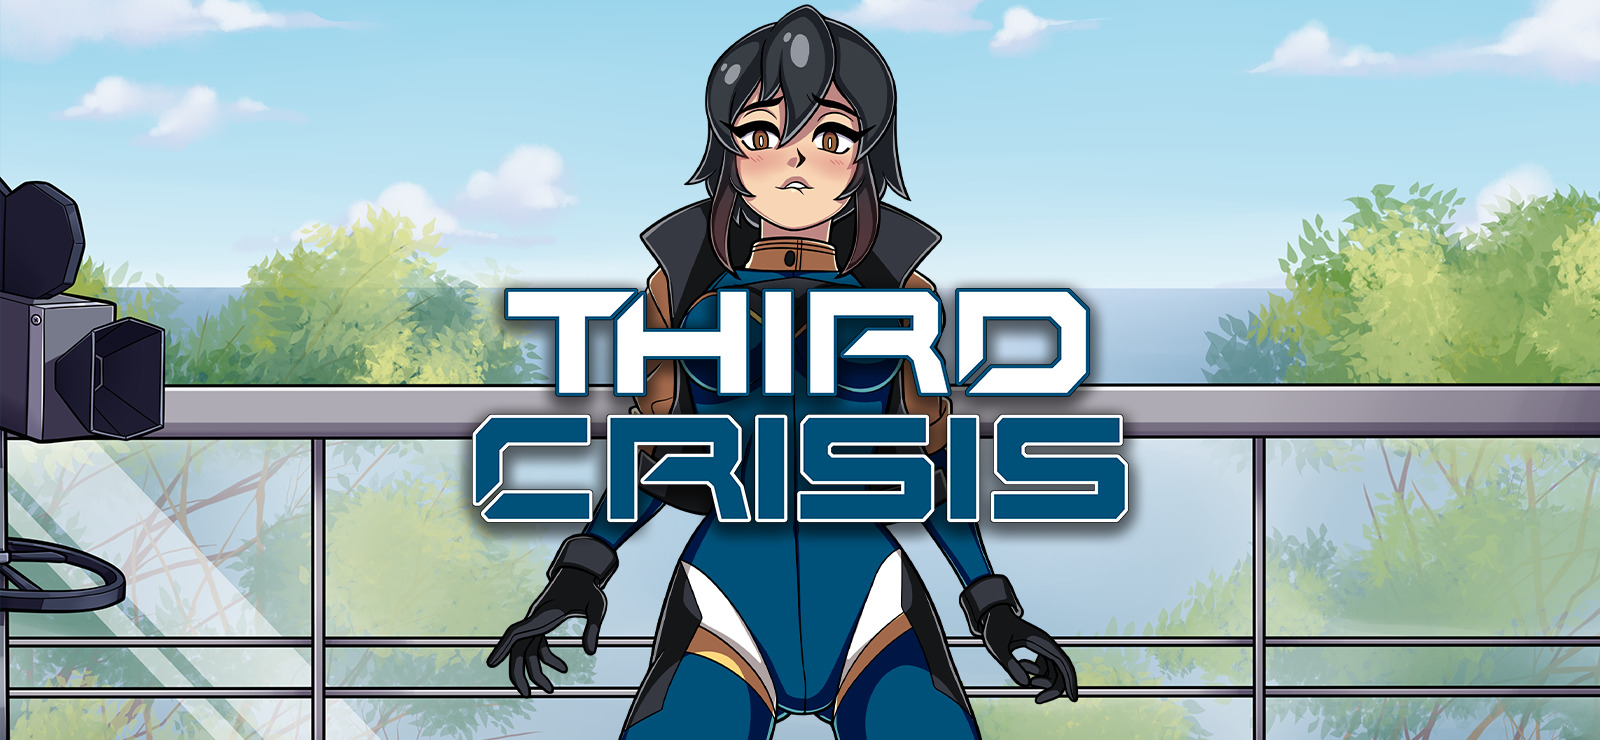 Third crisi